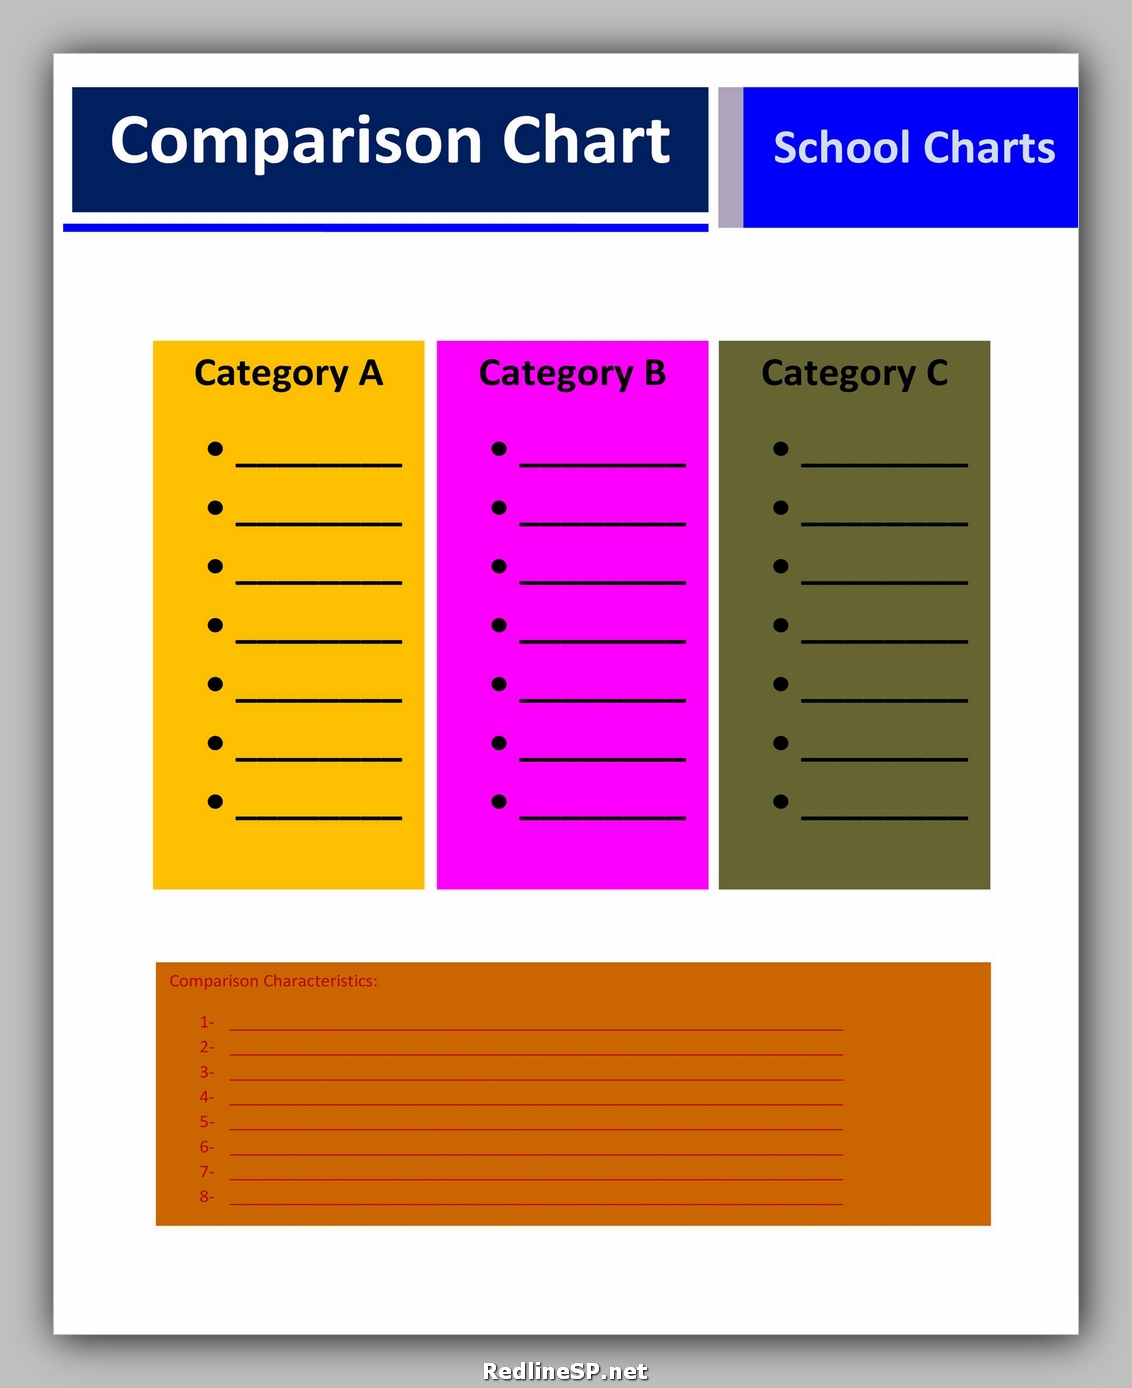 Charts compare. Comparison Chart шаблон. Comparatives шаблон. Height Comparison Chart шаблон. Comparative Charts.